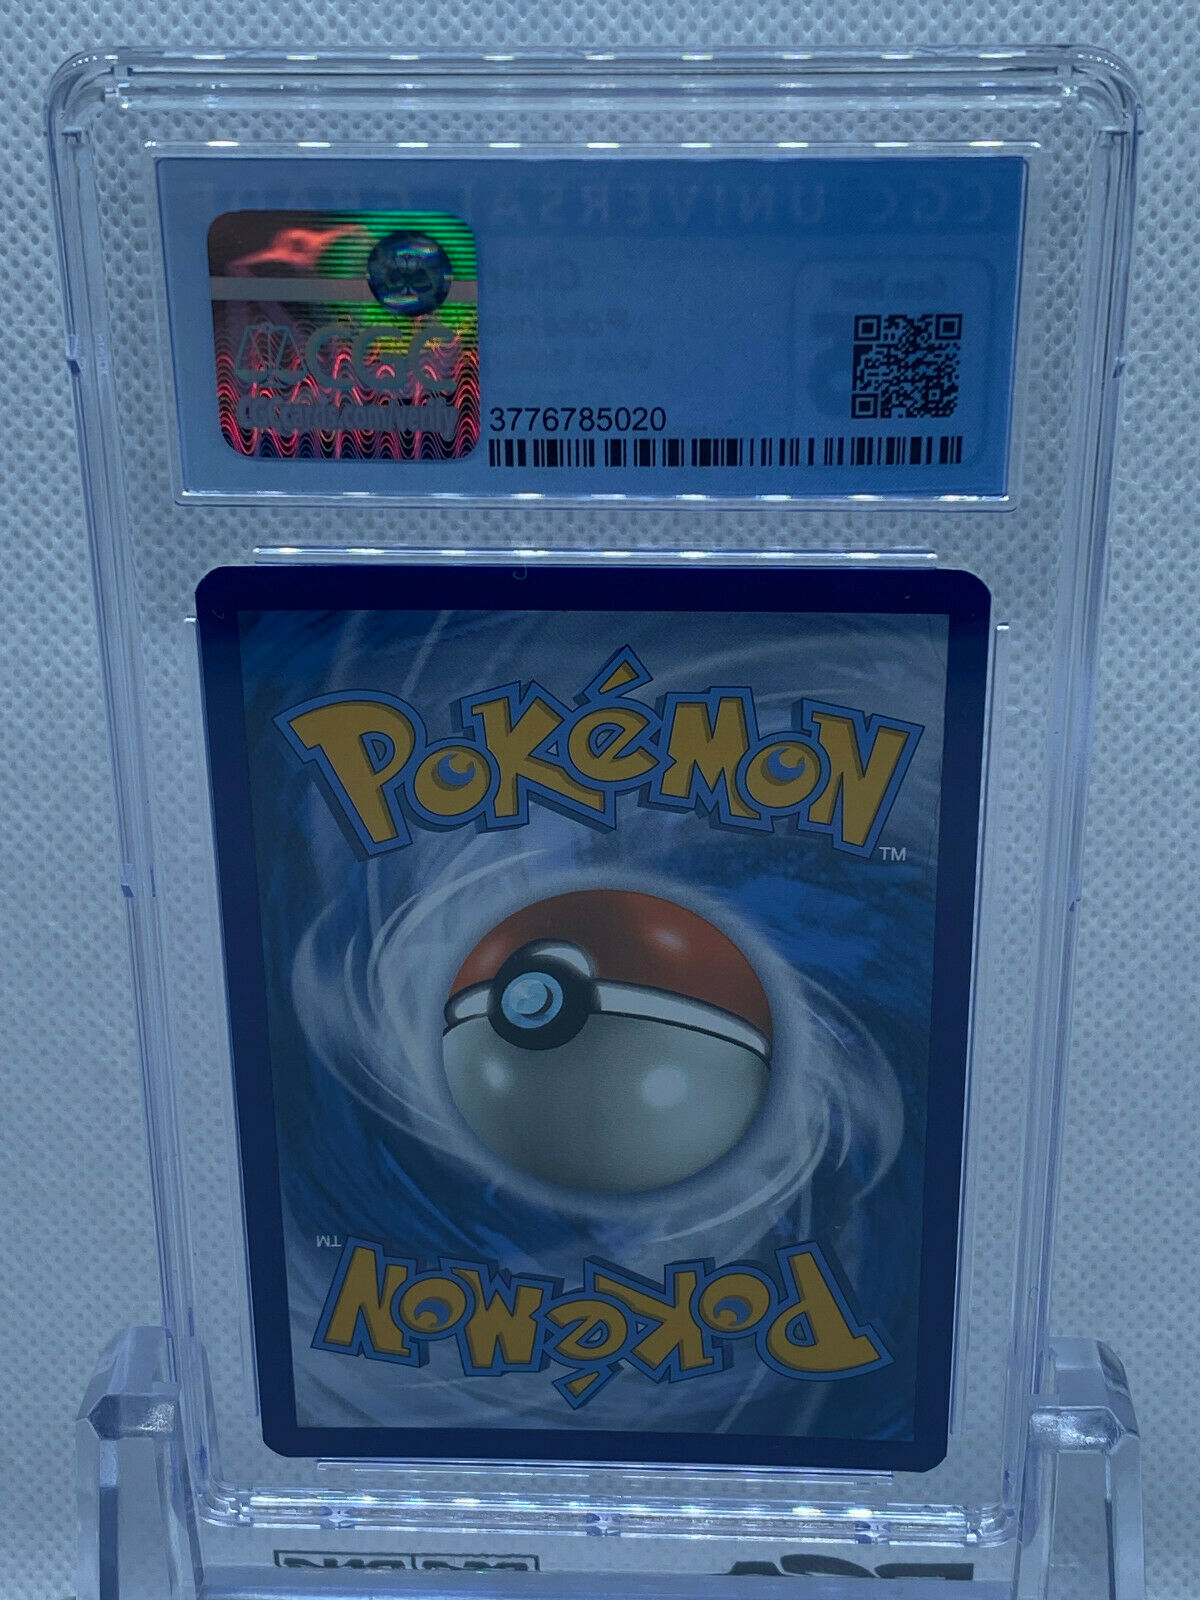 Pokémon (2020) Vivid Voltage Cracked Ice Holo Charizard CGC Gem Mint 9.5